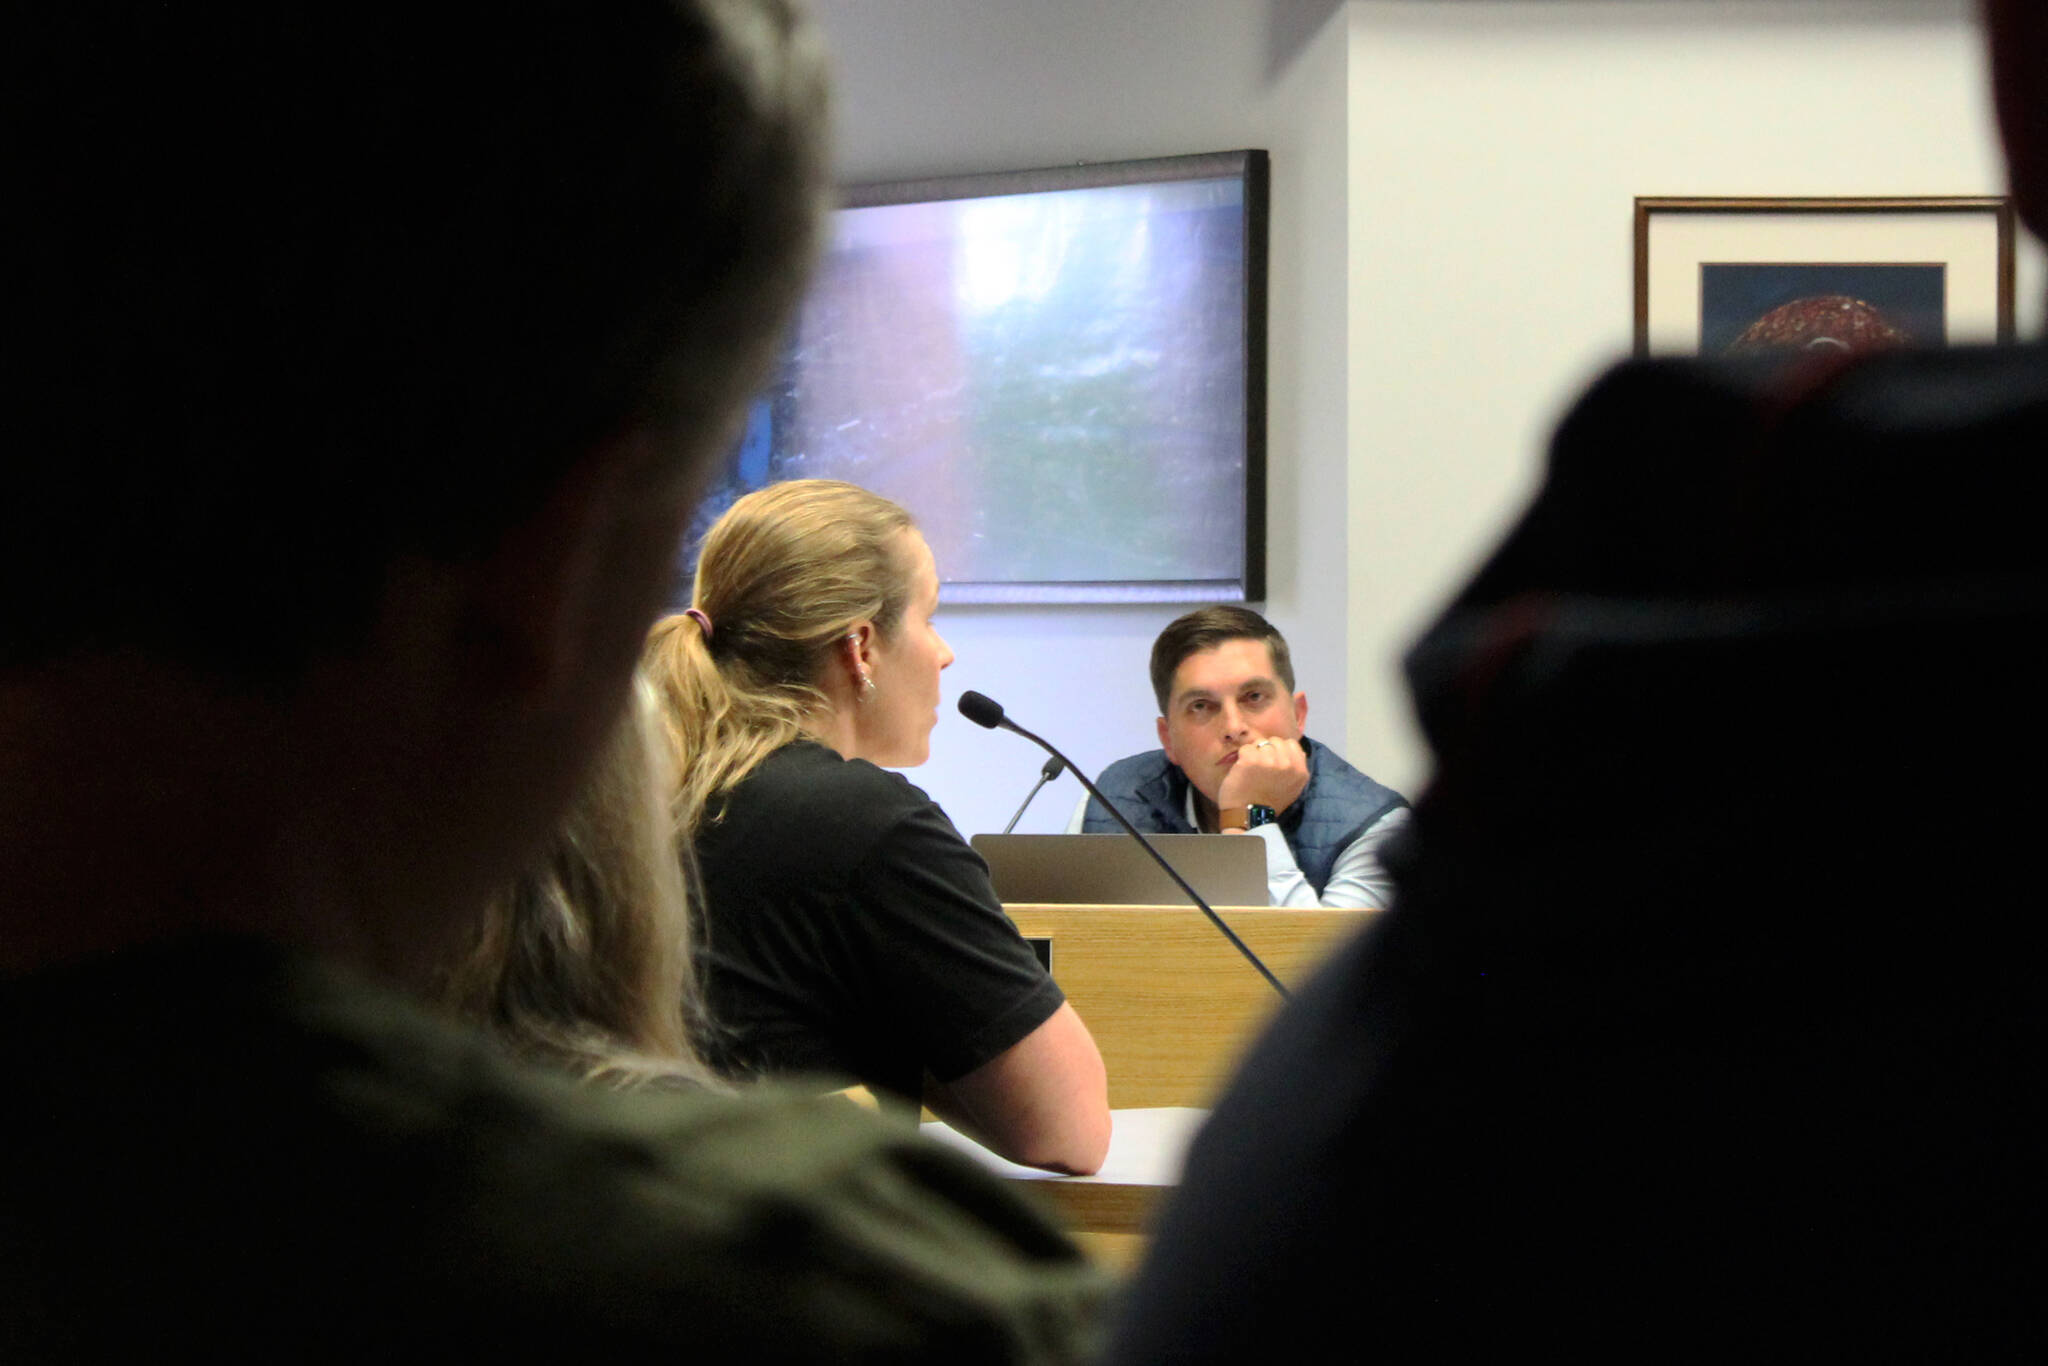 Soldotna City Council member Justin Ruffridge looks on while Tamra Wear testifies at a meeting of the council meeting on Wednesday, July 13, 2022, in Soldotna, Alaska. (Ashlyn O’Hara/Peninsula Clarion)